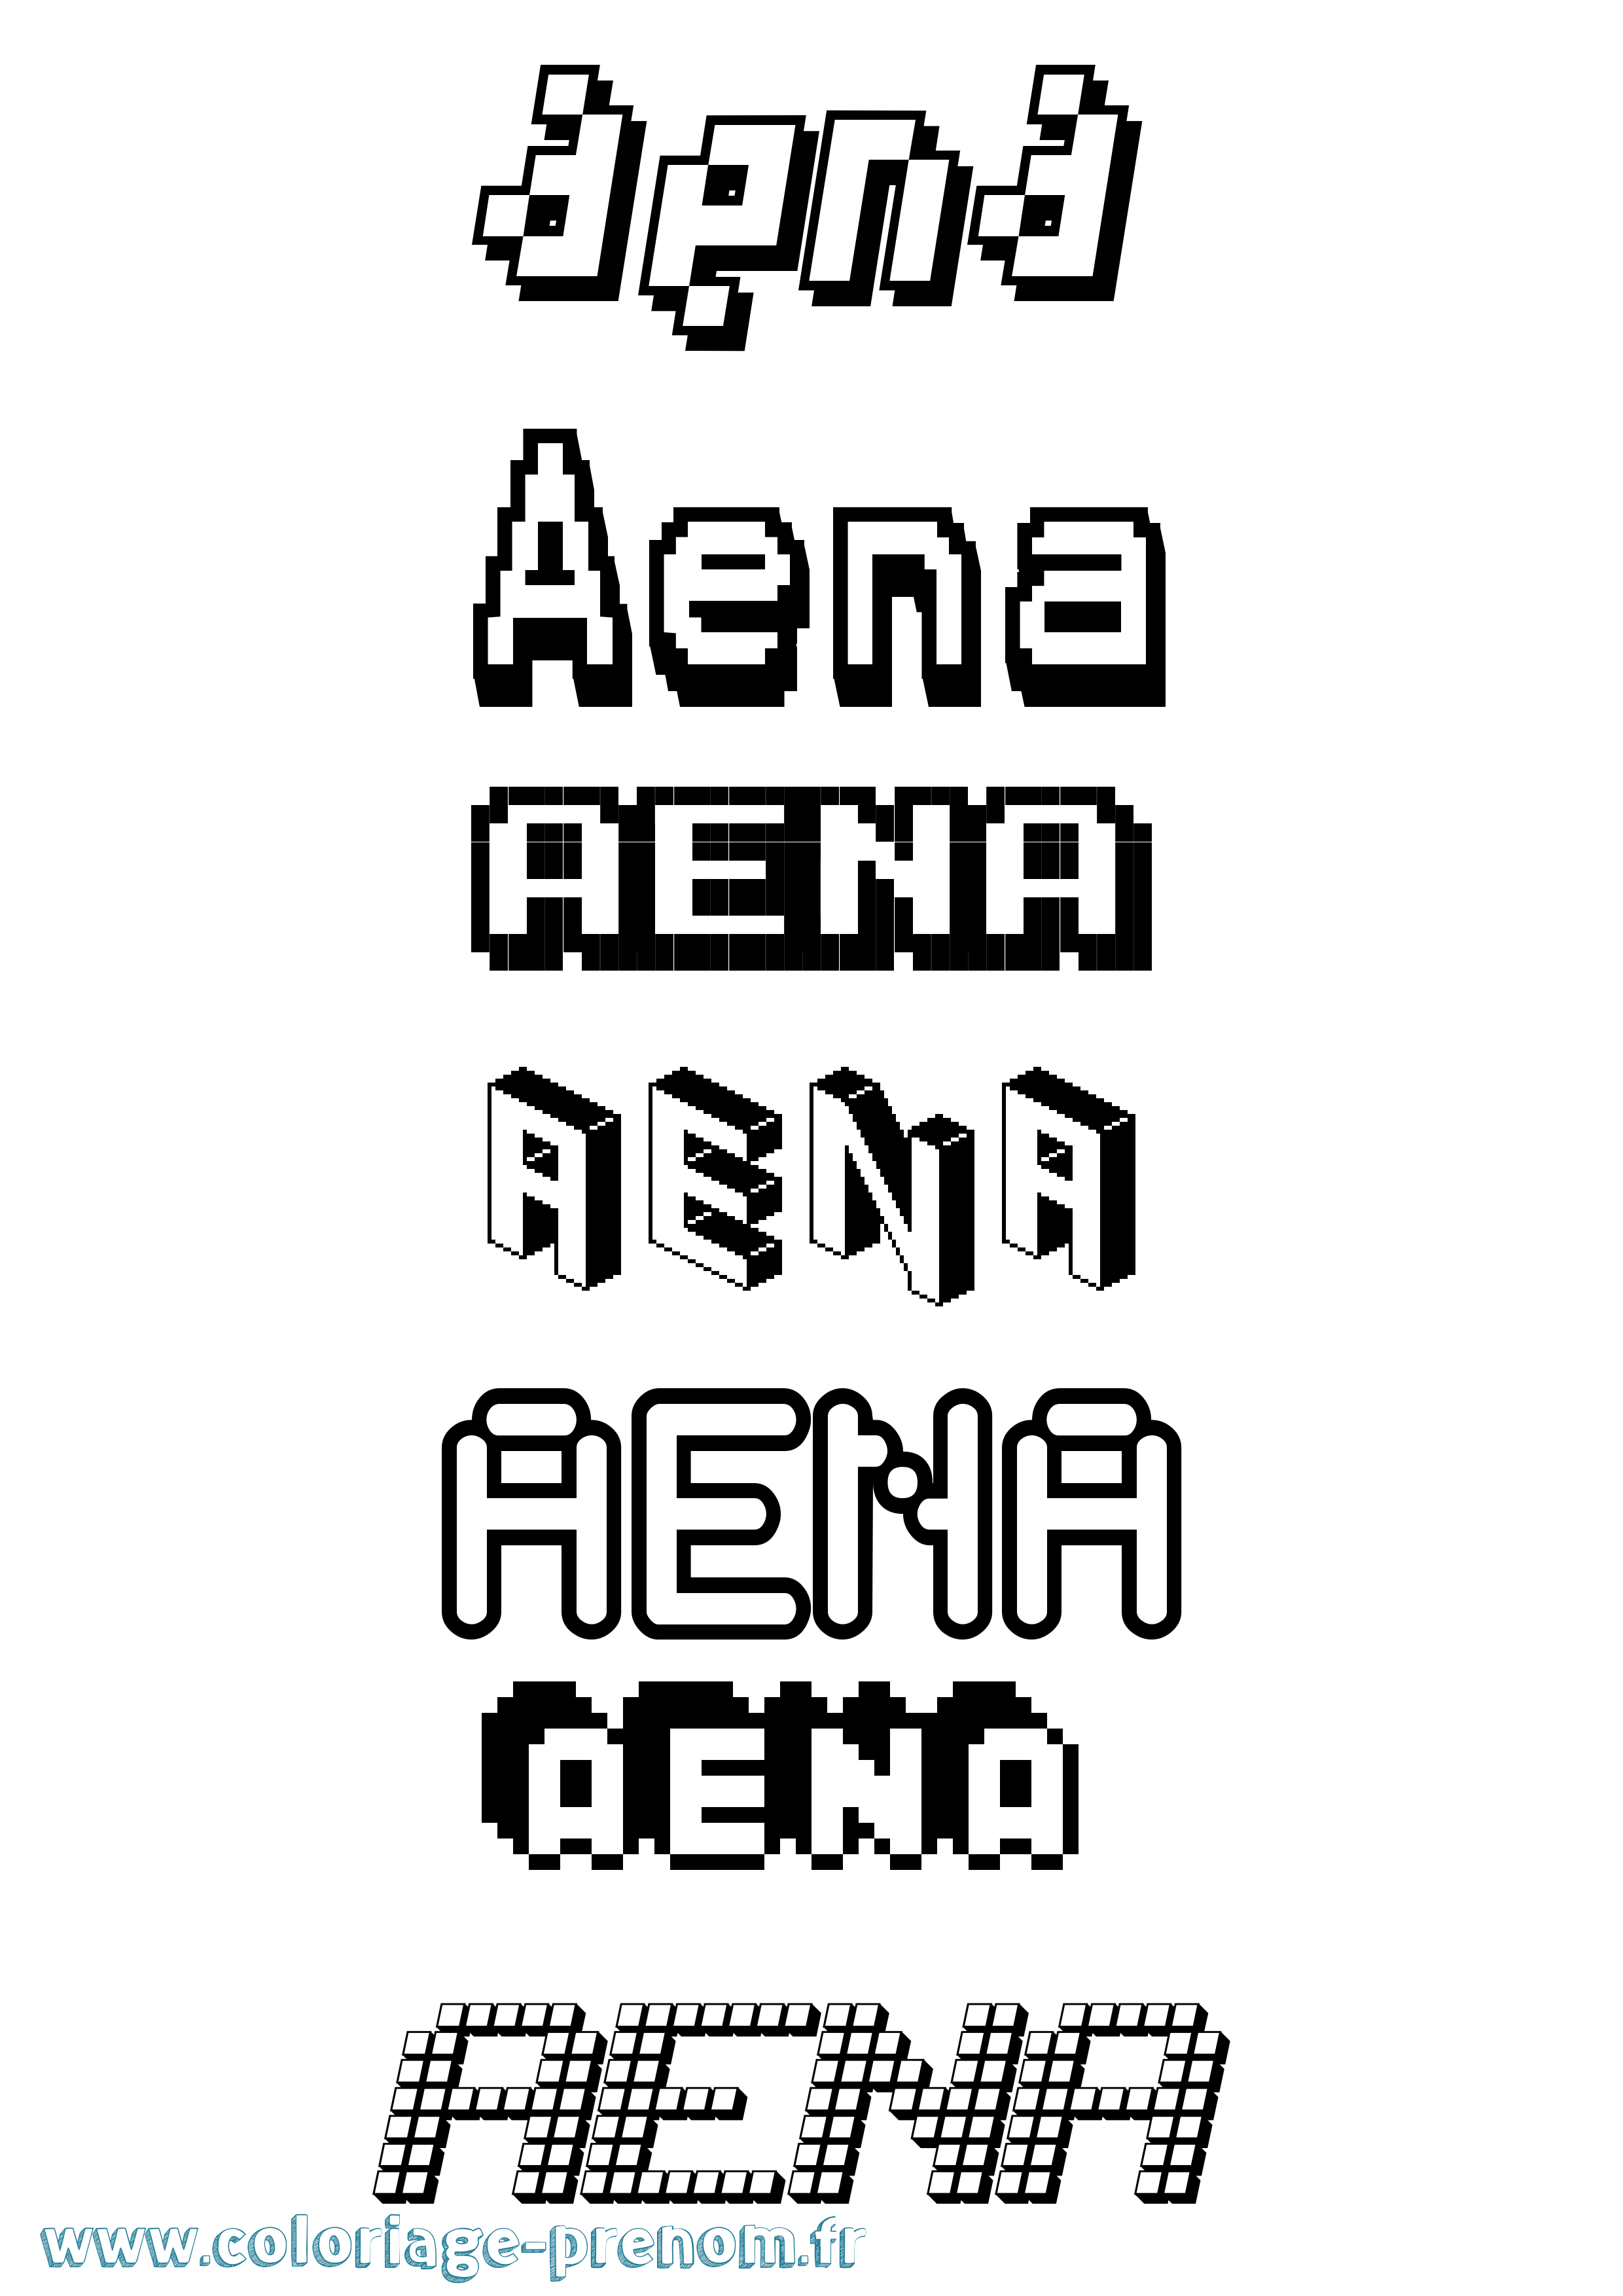 Coloriage prénom Aena Pixel